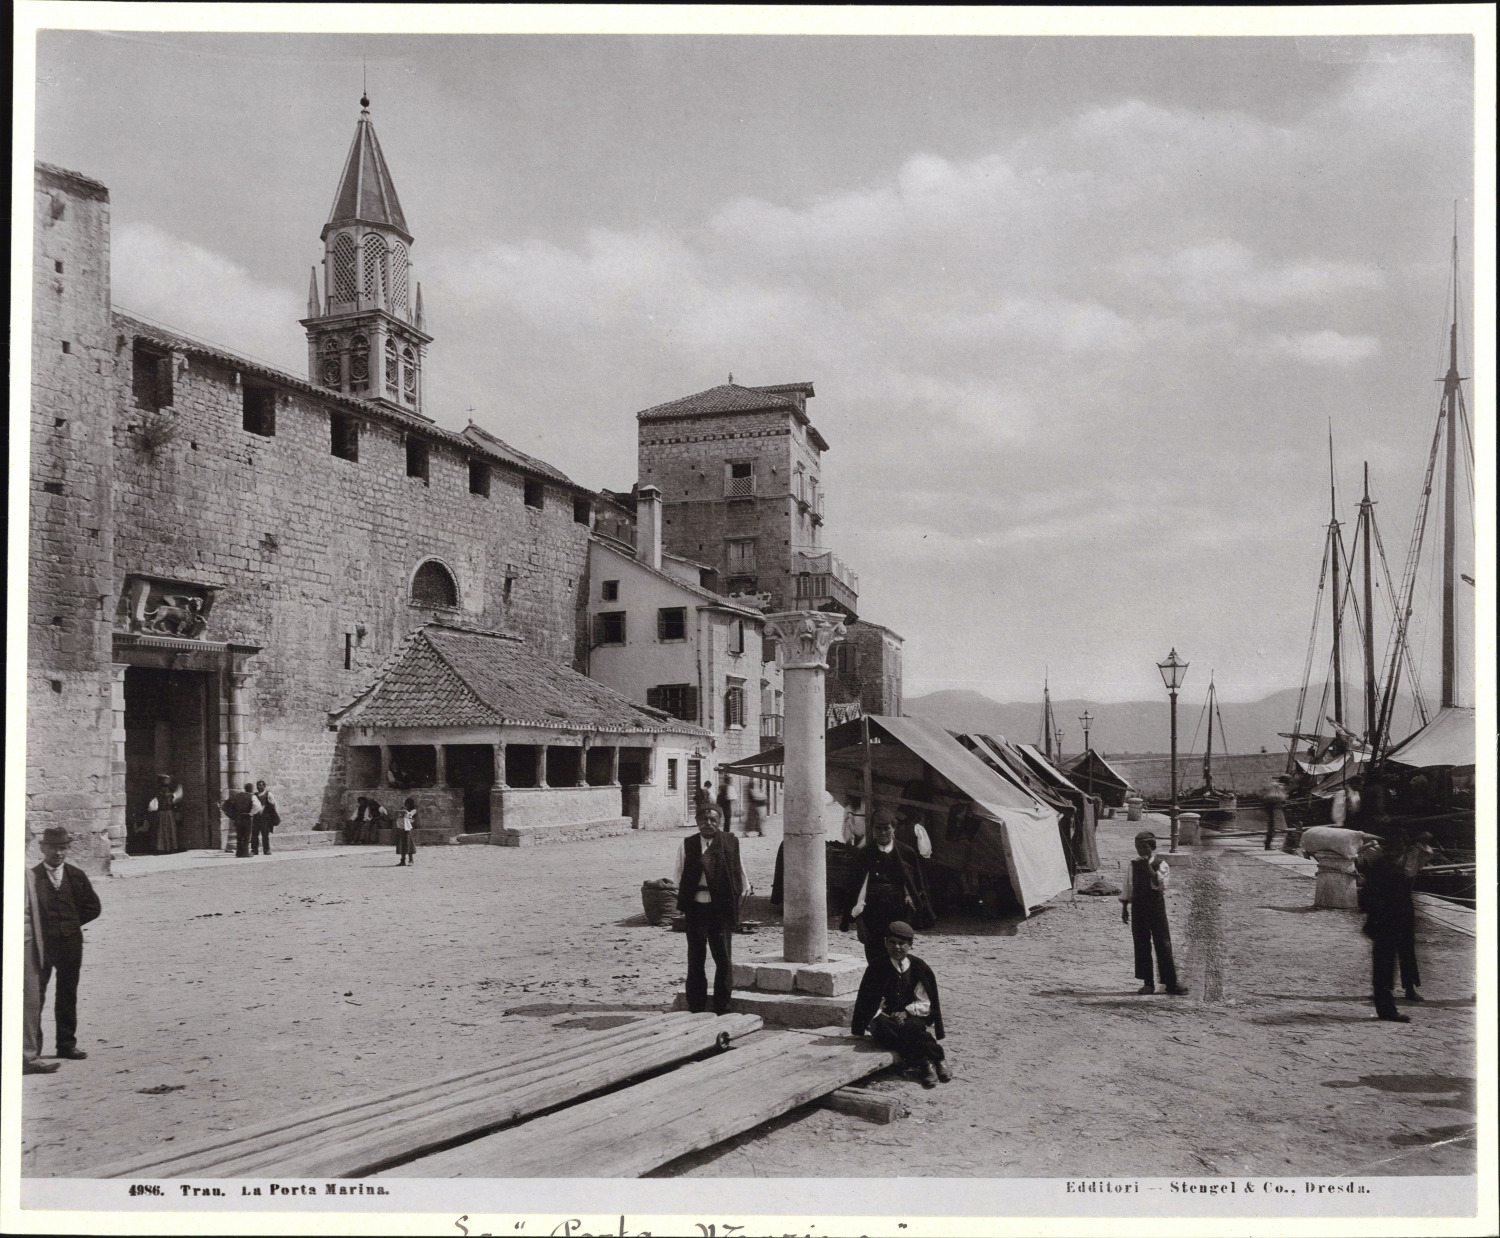 Stengel & Co, Hrvatska, Traù, La Porta Marina vintage photomechanical print Ph